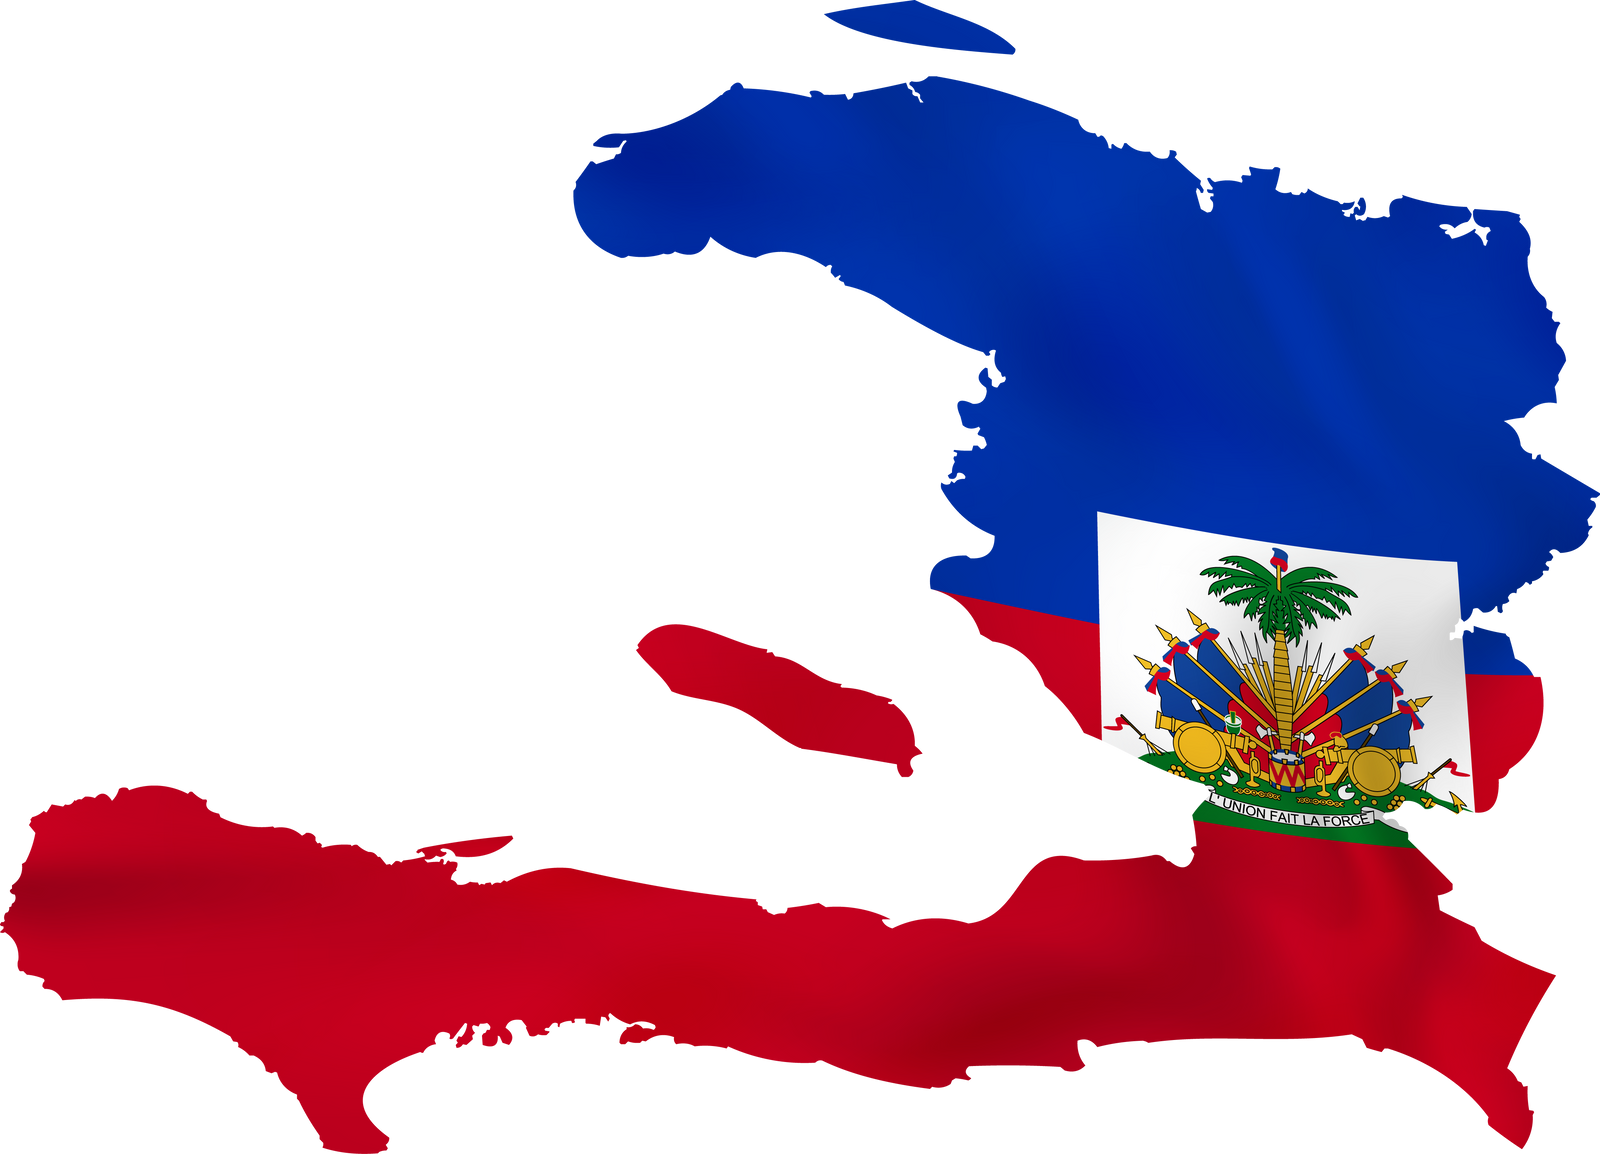 Haiti with waving flag.